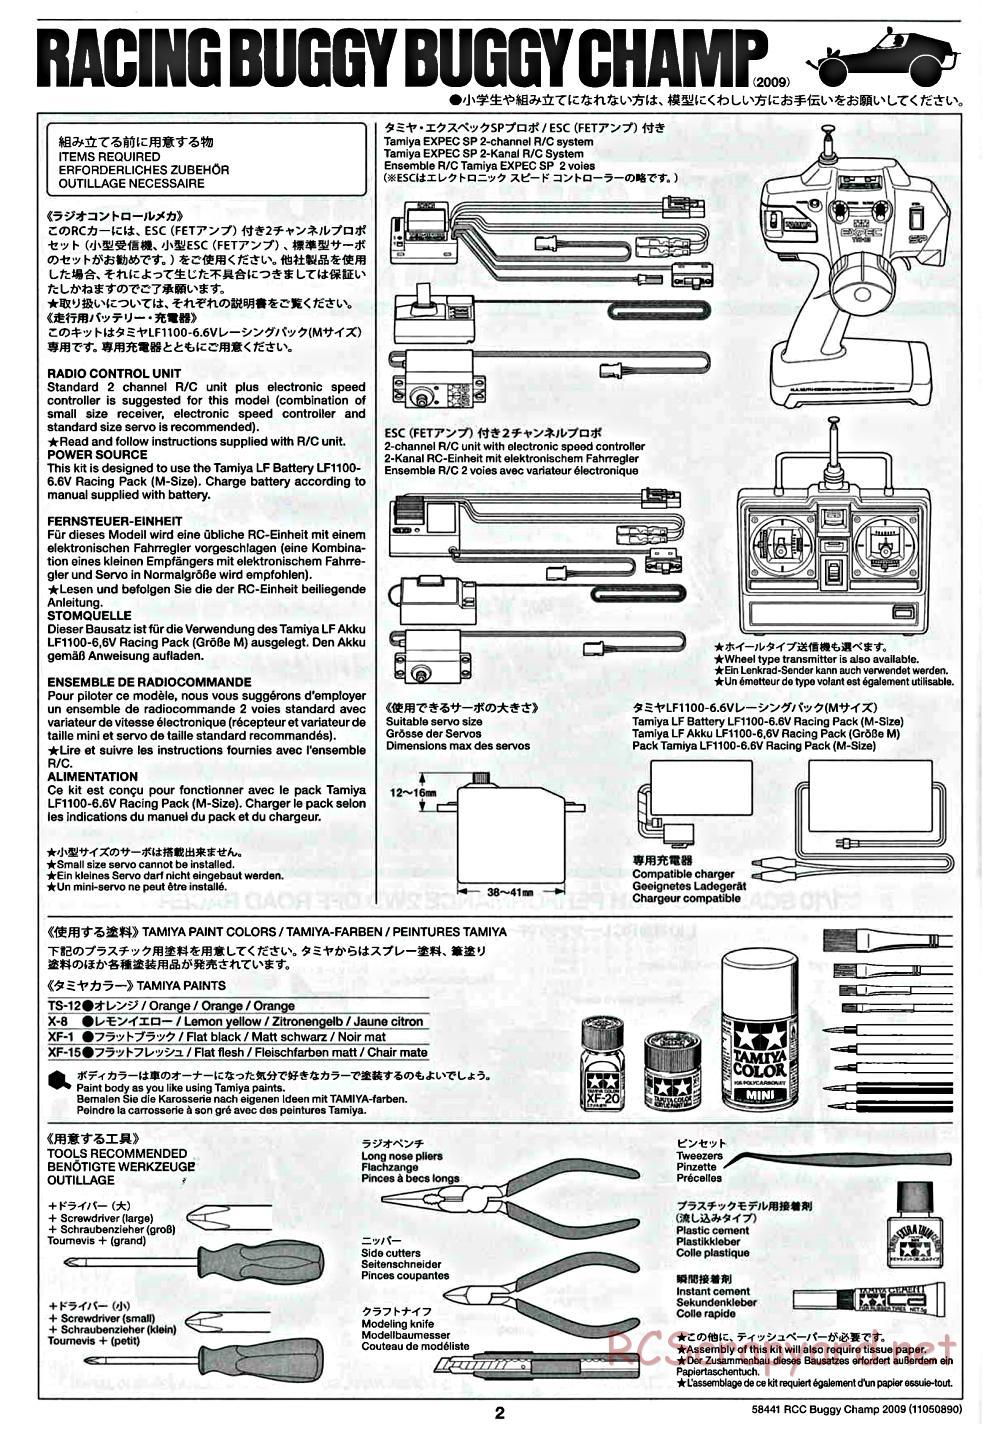 Tamiya - Buggy Champ Chassis - Manual - Page 2